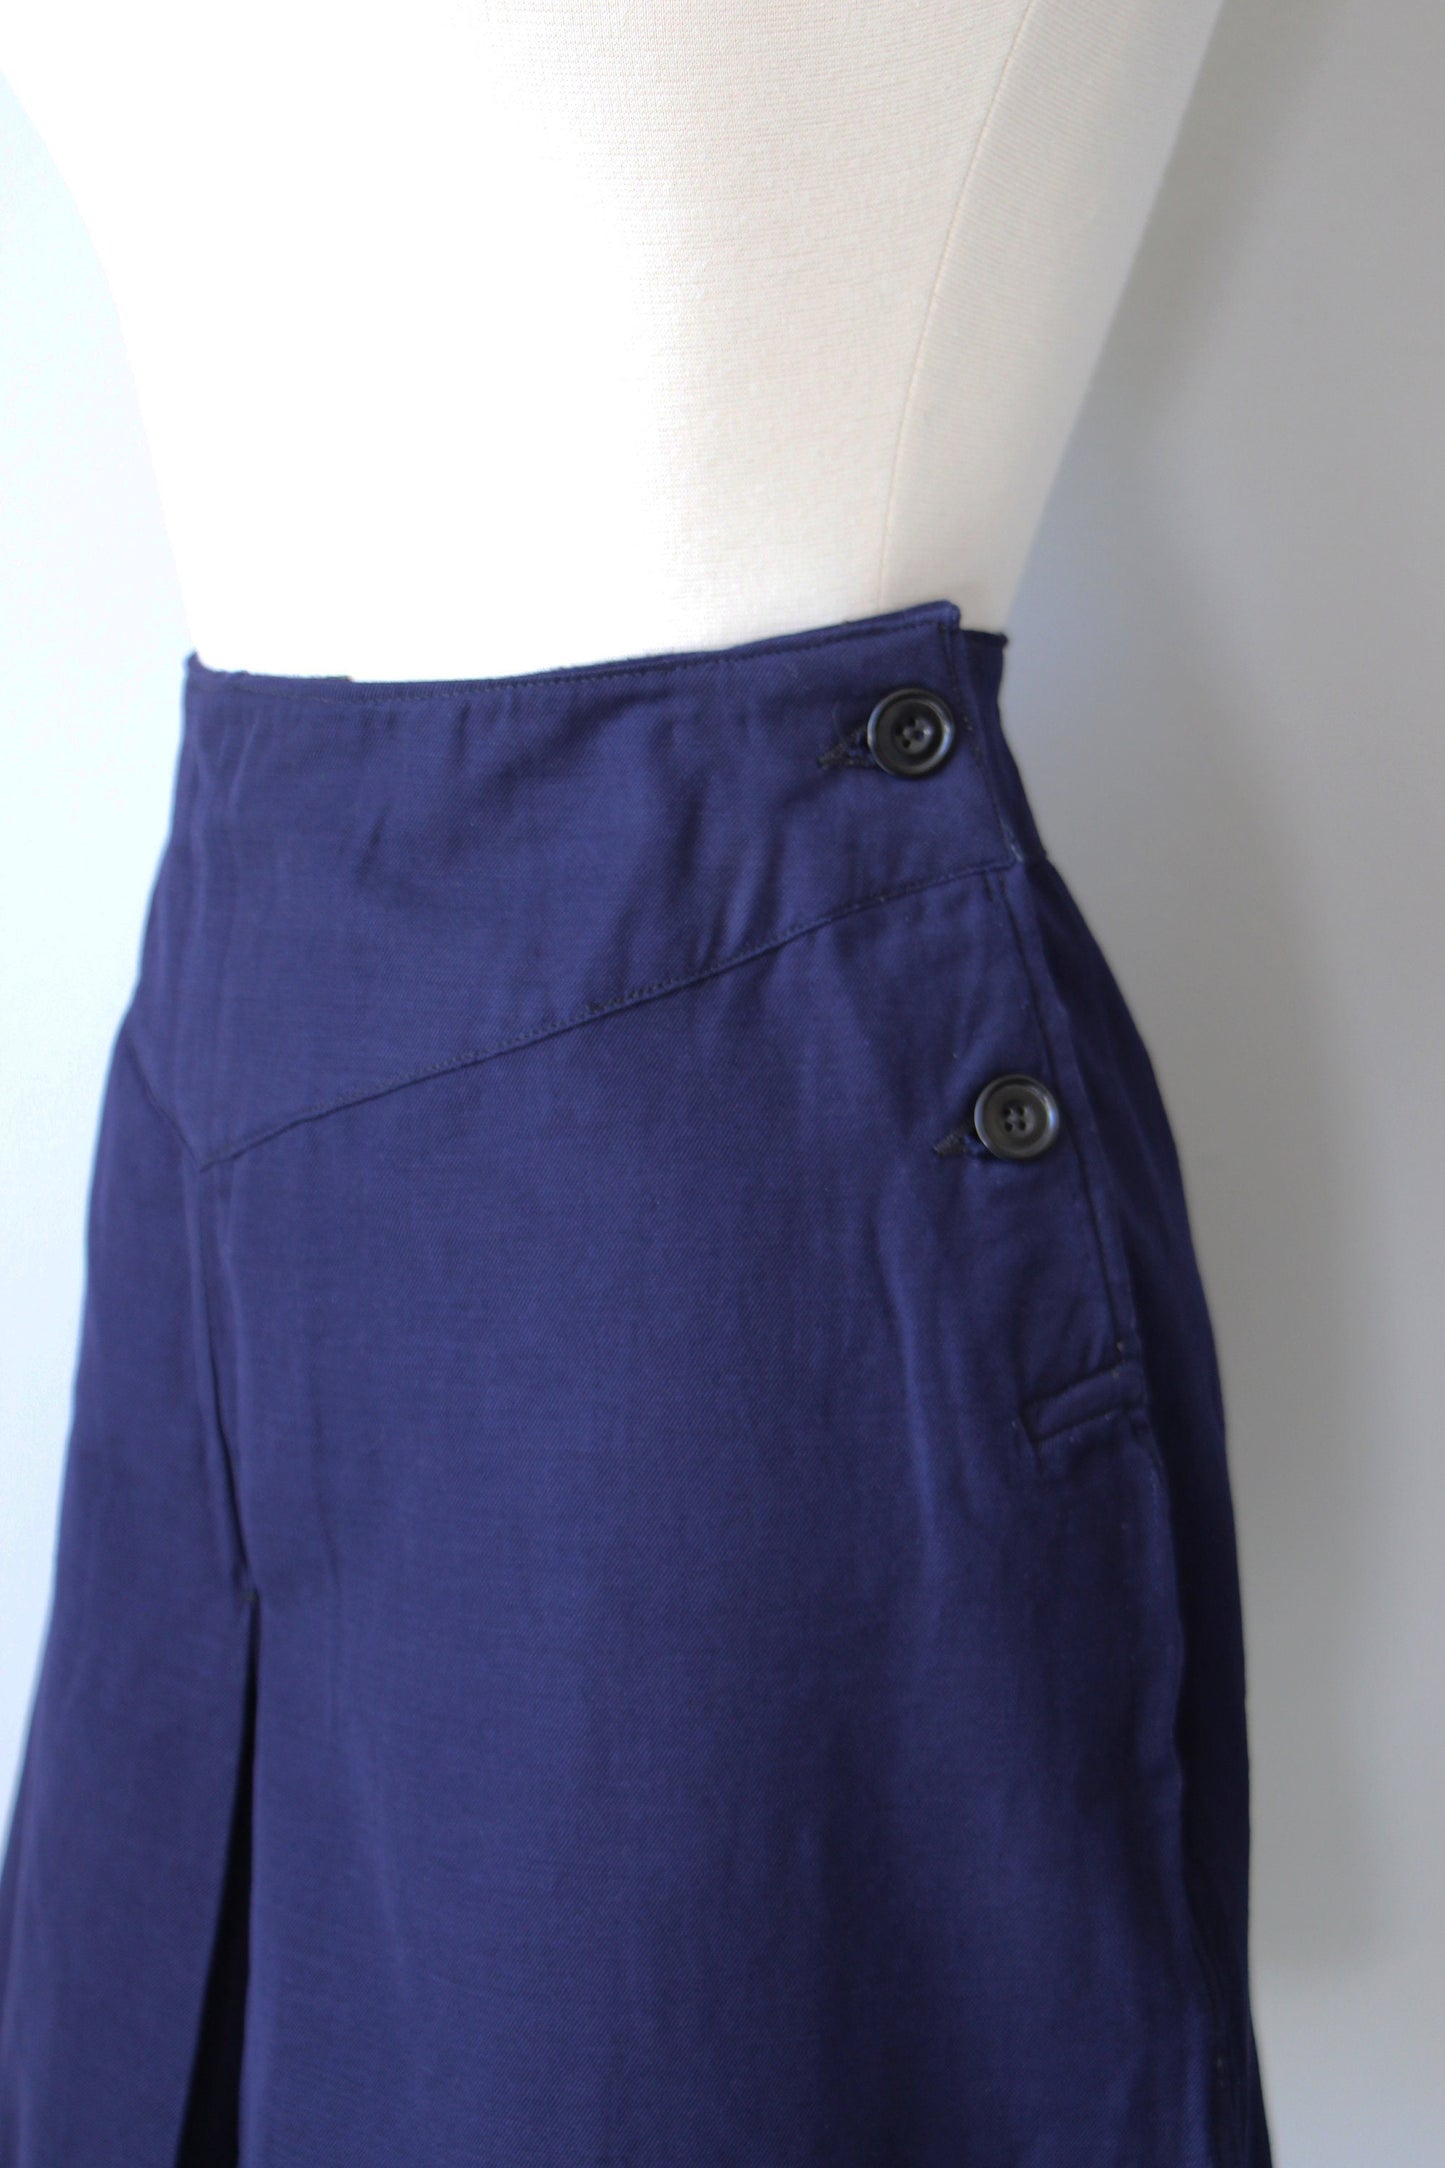 Vintage 1940s 1950s British Navy WRENS Cotton Side Button High Waist Split Skirt Culottes RARE Size XS to M